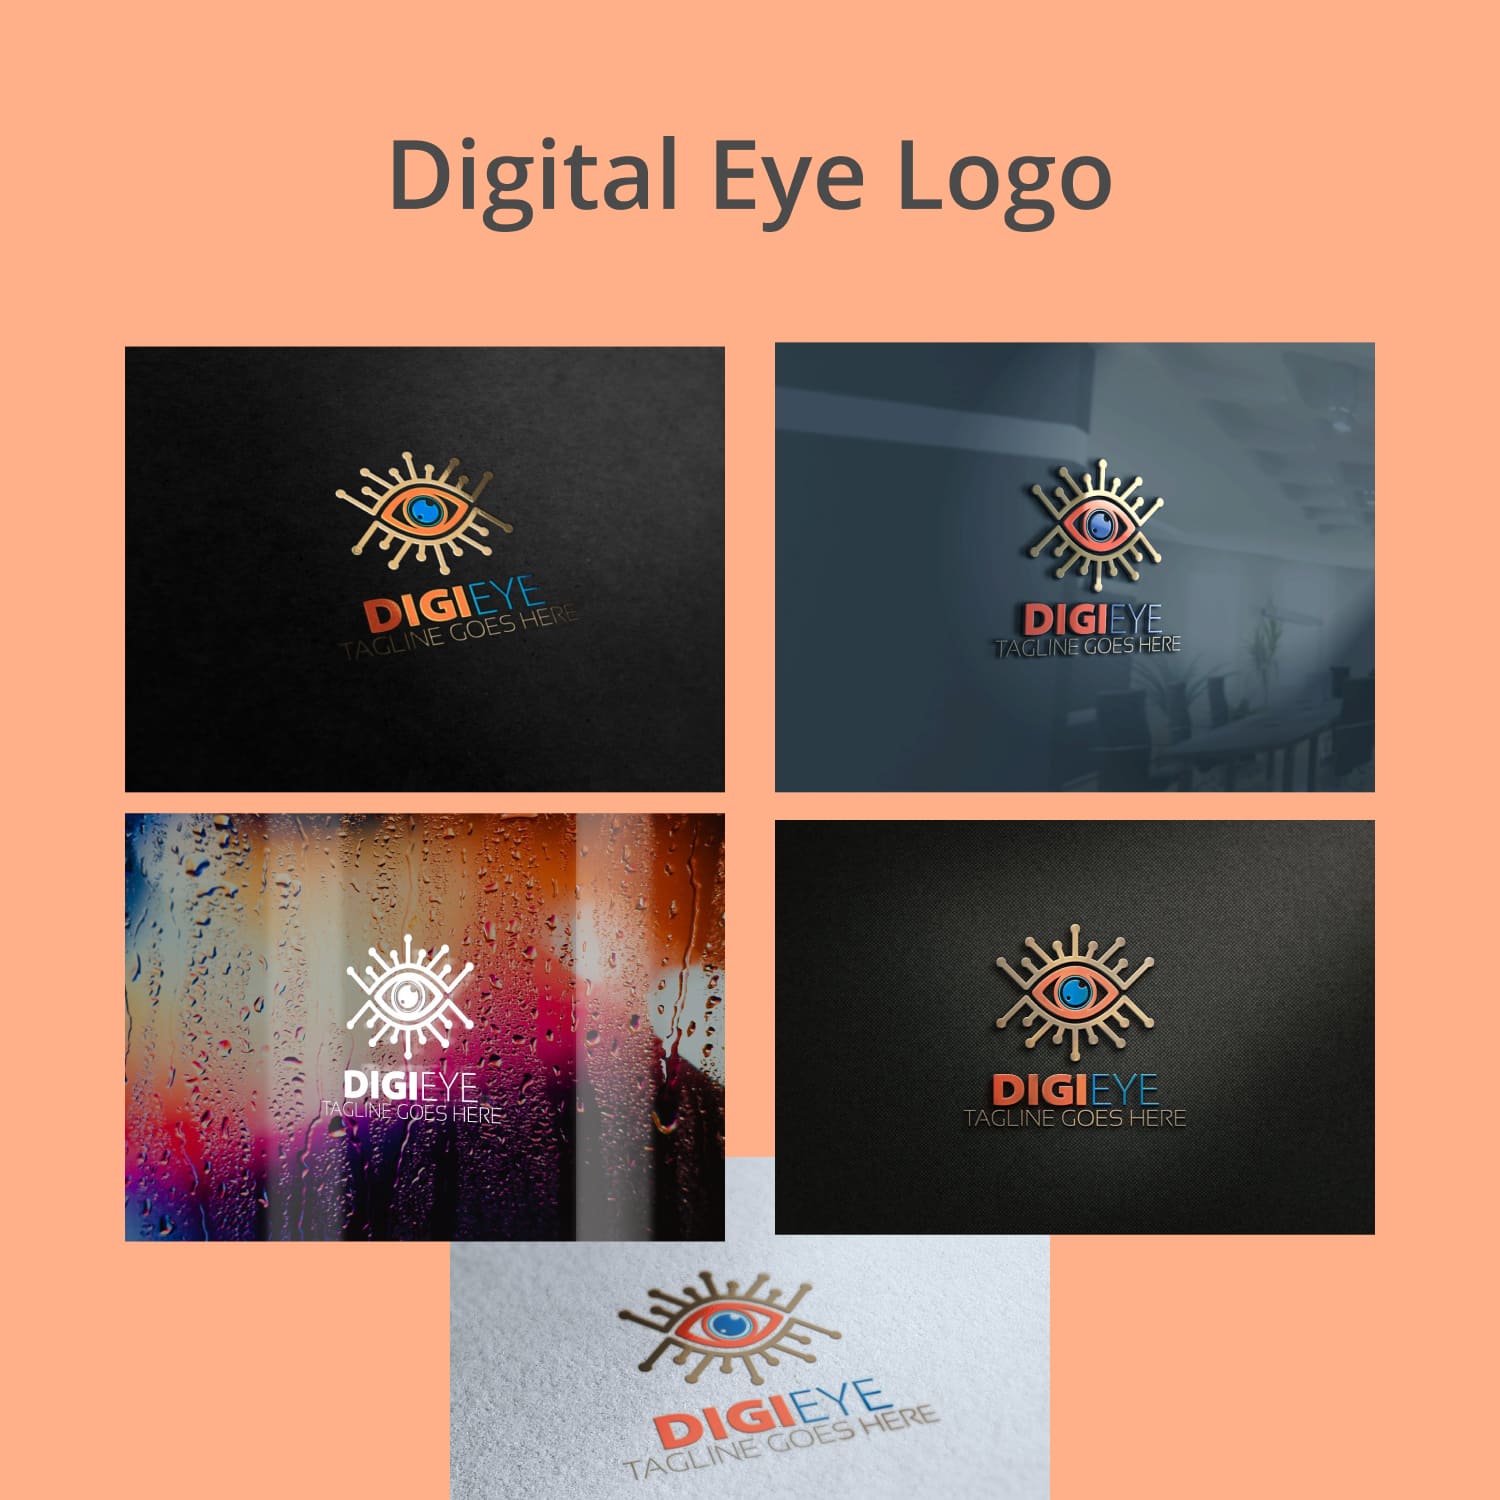 Digital Eye Logo cover image.